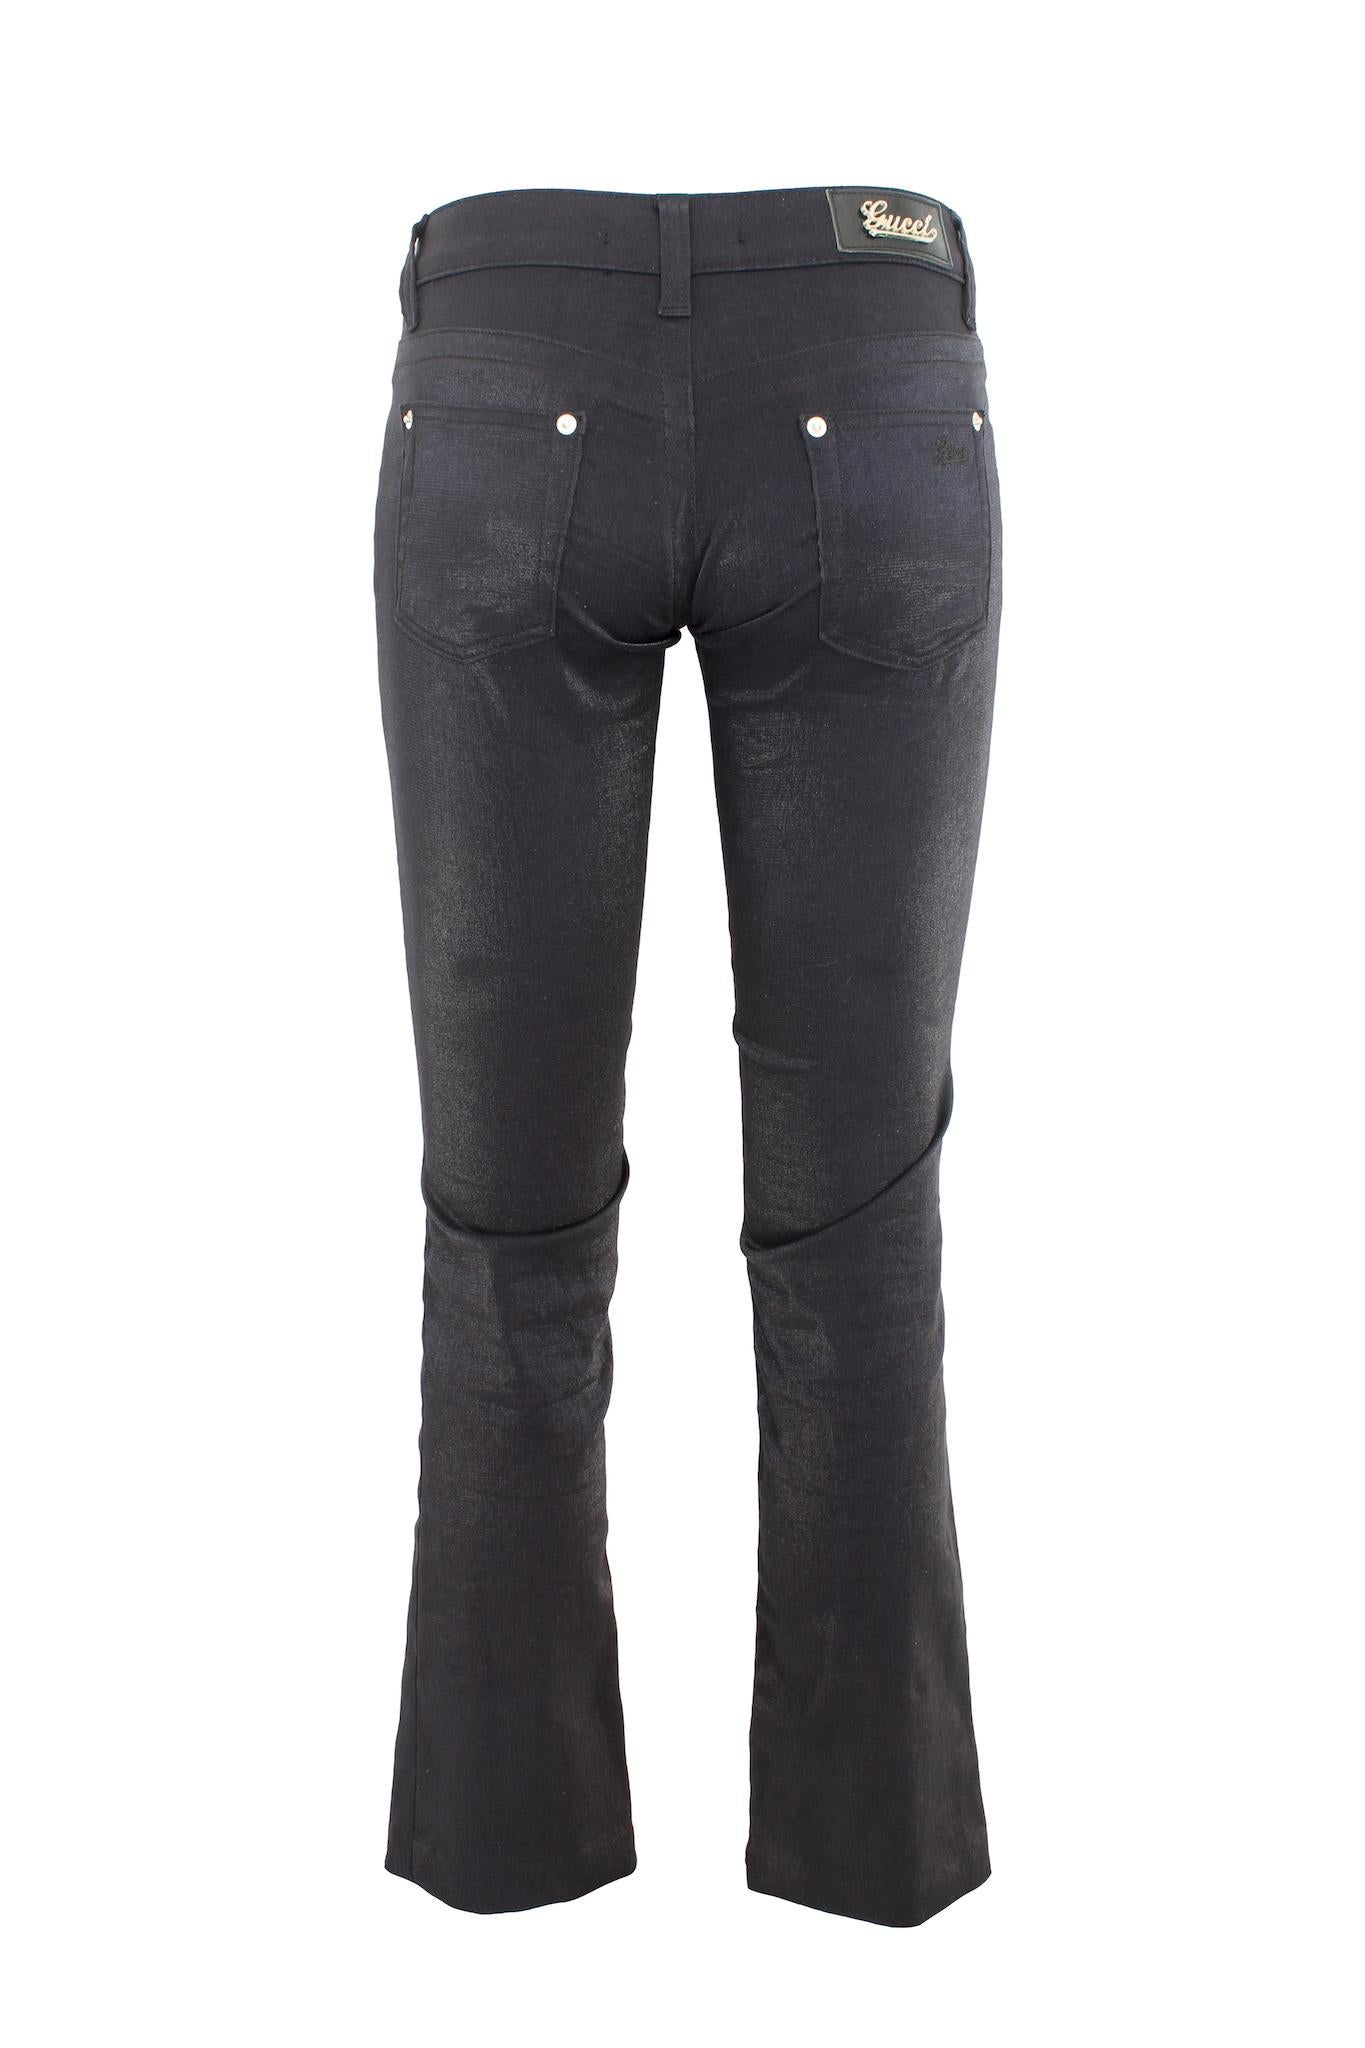 Gucci 2000s Capri trousers. Jeans in lurex waxed fabric, black colour, logoed buttons, ankle length. 75% pamuk fabric, 22% polyester.

Size: 42 It 8 Us 10 Uk

Waist: 35 cm
Crotch: 75 cm
Length: 91cm
Hem: 18 cm